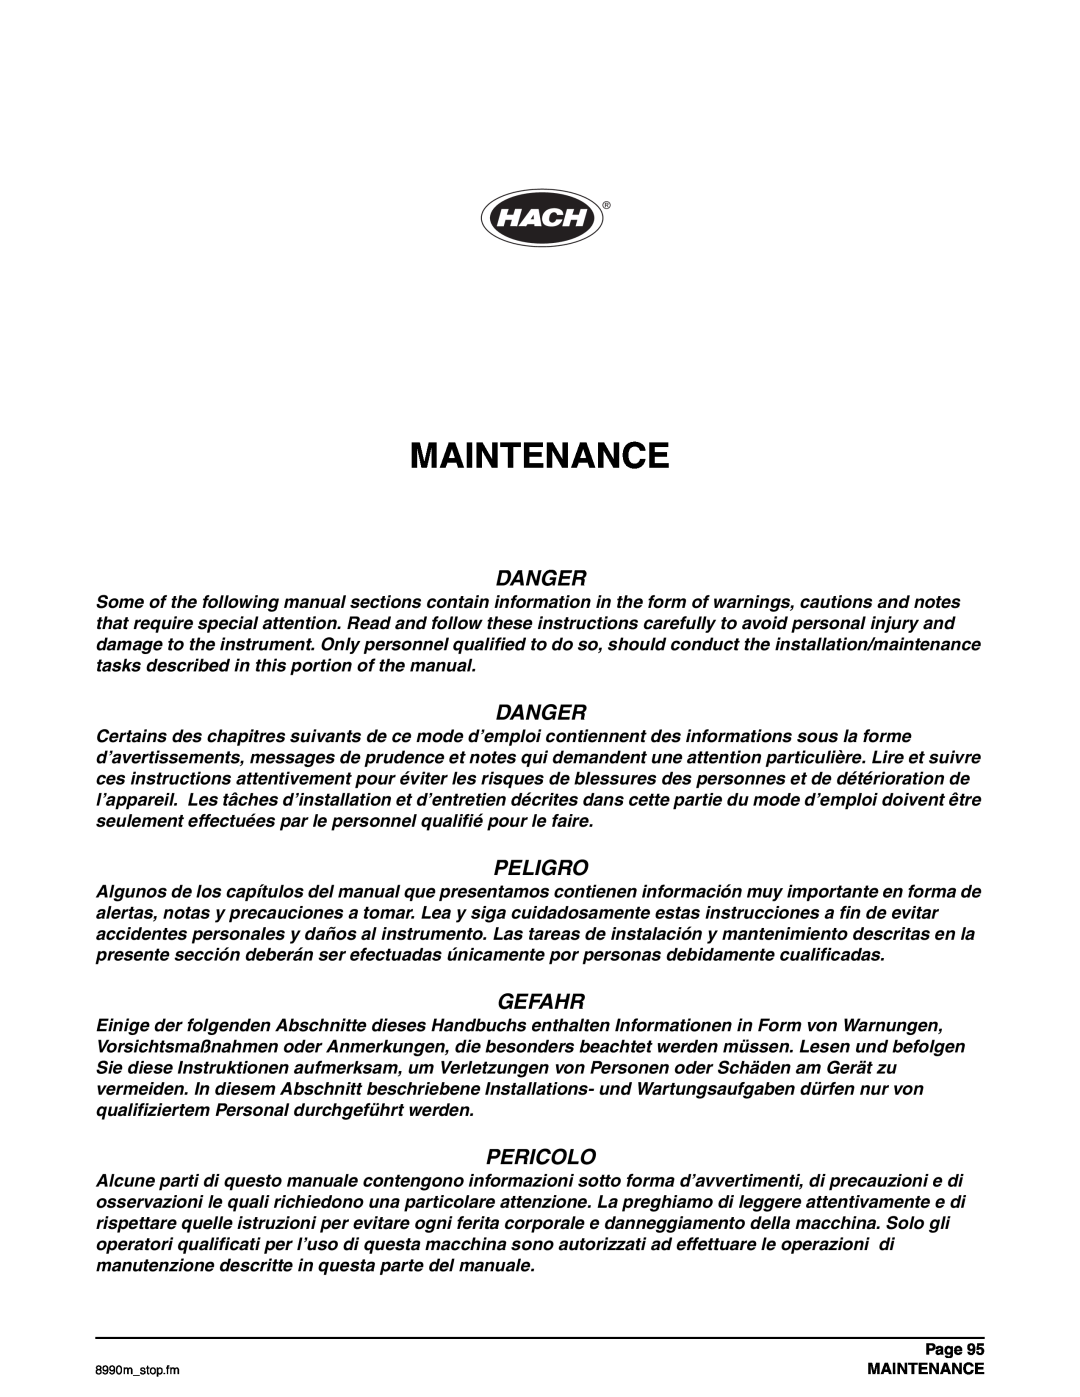 Hach 900 MAX manual Maintenance, Danger, Peligro, Gefahr, Pericolo 